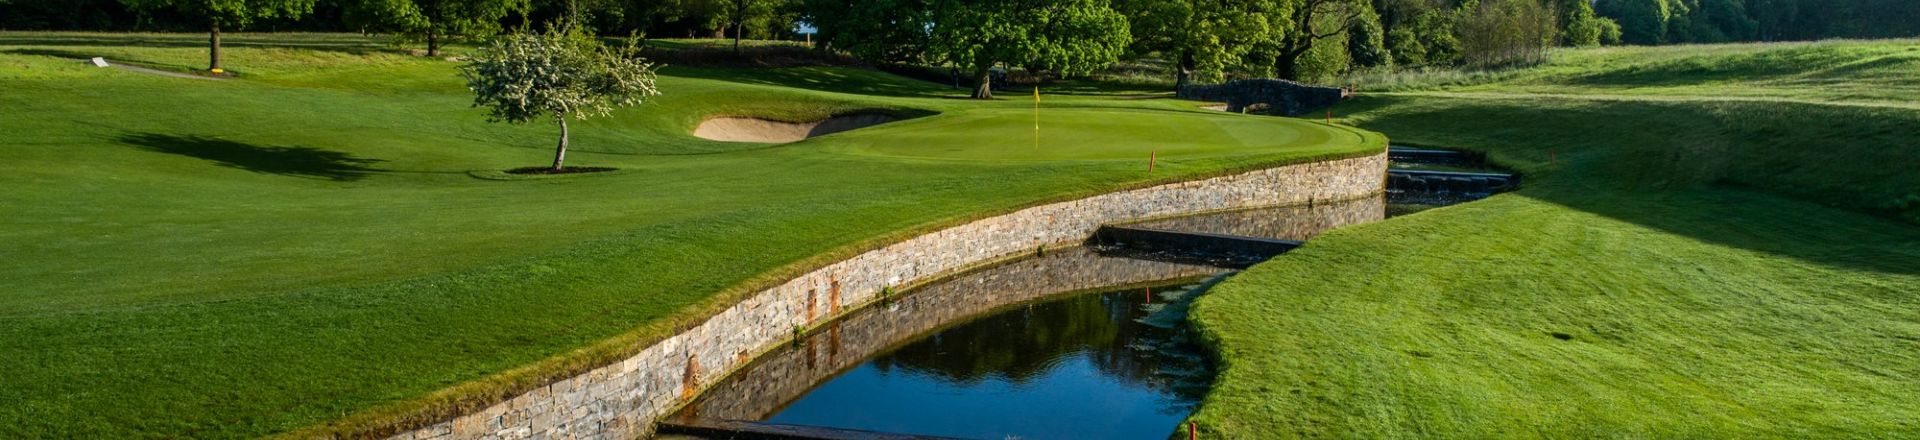 Killeen Castle Golf Course